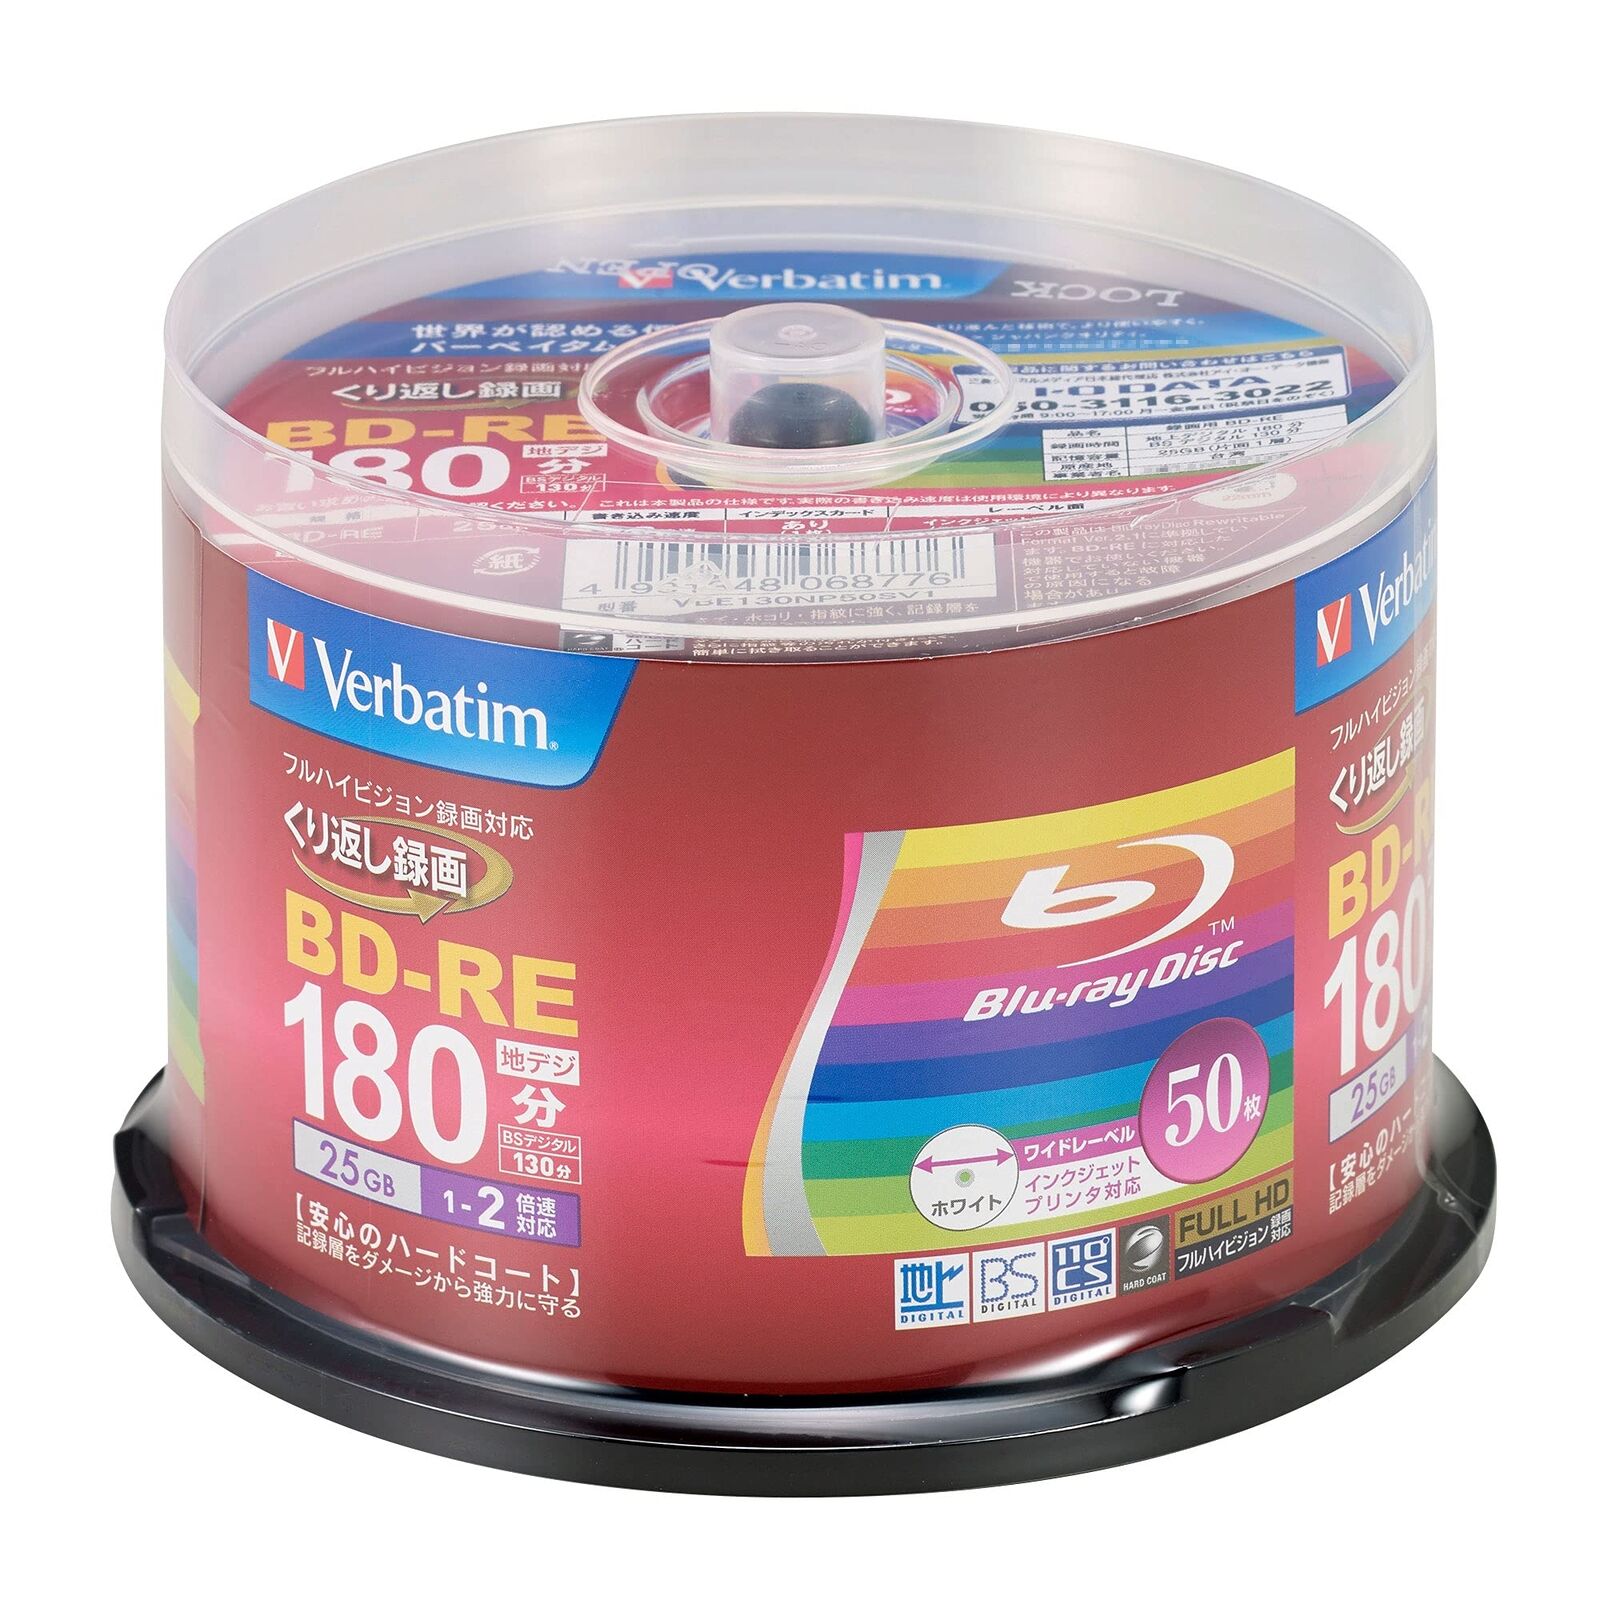 Verbatim Japan Blu-ray Disc BD-RE 25GB Repeated recording White printable